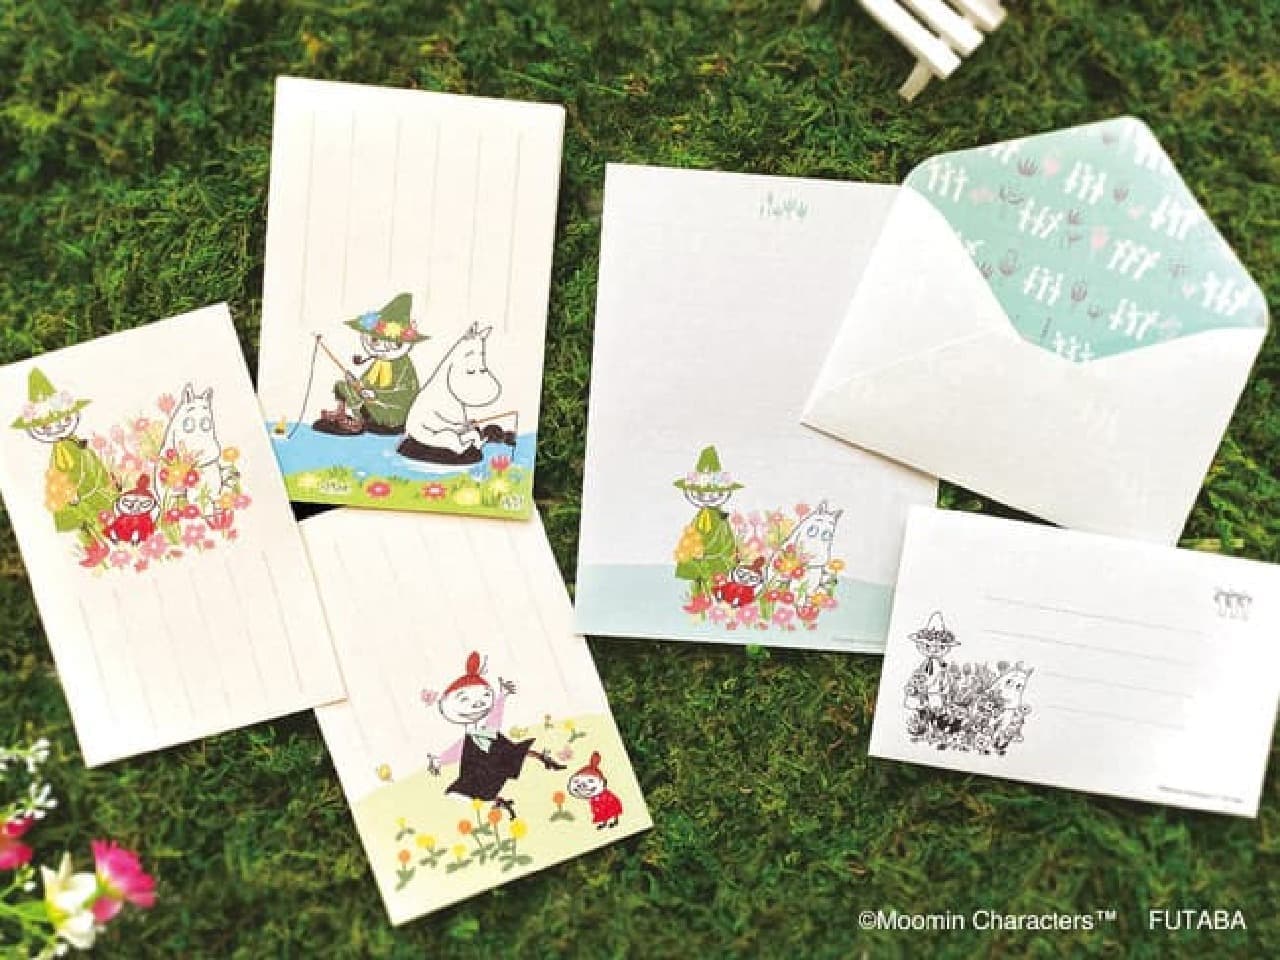 Moomin Seasonal Iyo Washi Goods Spring" at post offices -- Moomin pattern postcards and letter sets to enjoy spring